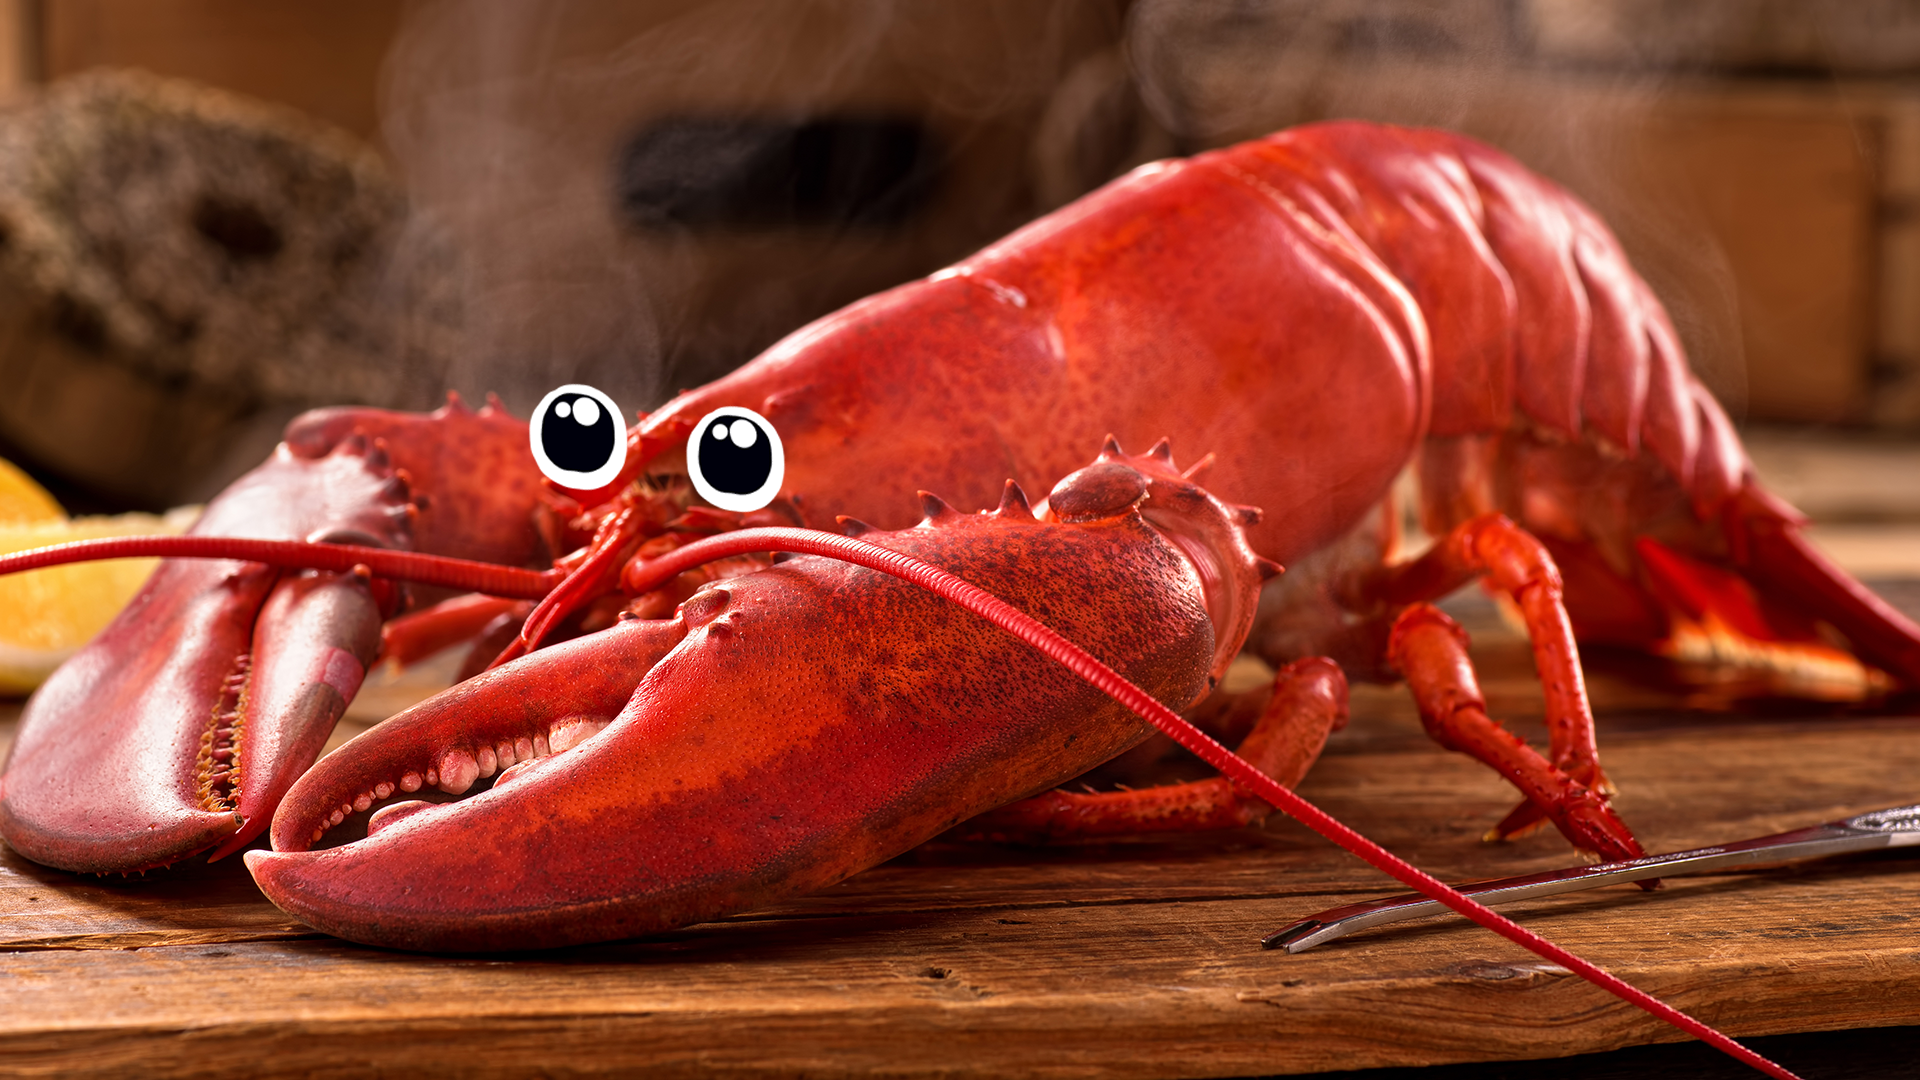 A big ol' red lobster